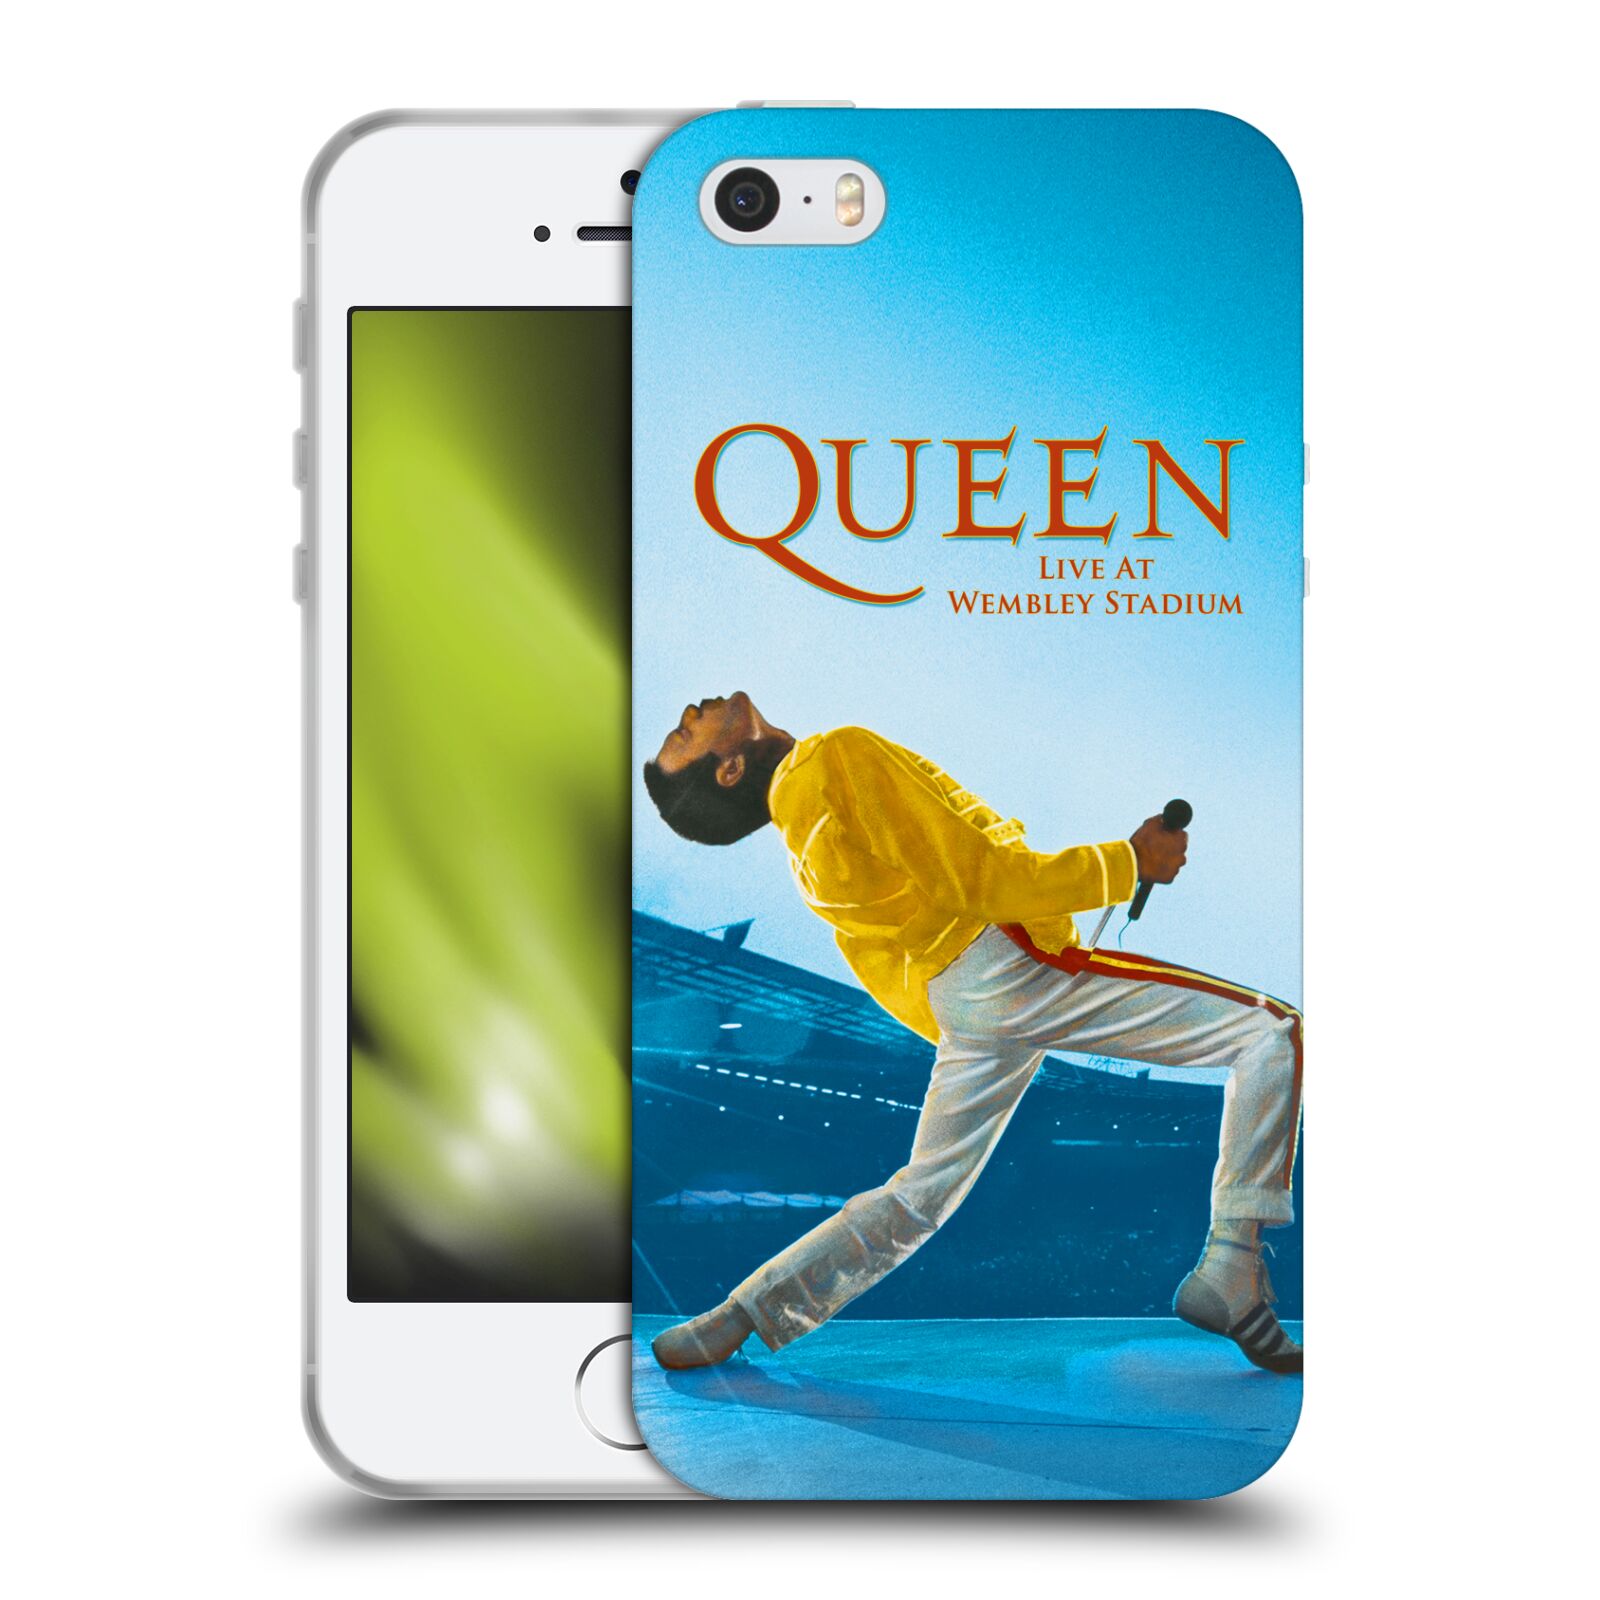 Silikonové pouzdro na mobil Apple iPhone 5, 5S, SE - Head Case - Queen - Freddie Mercury (Silikonový kryt, obal, pouzdro na mobilní telefon Apple iPhone SE, 5S a 5 s motivem Queen - Freddie Mercury)